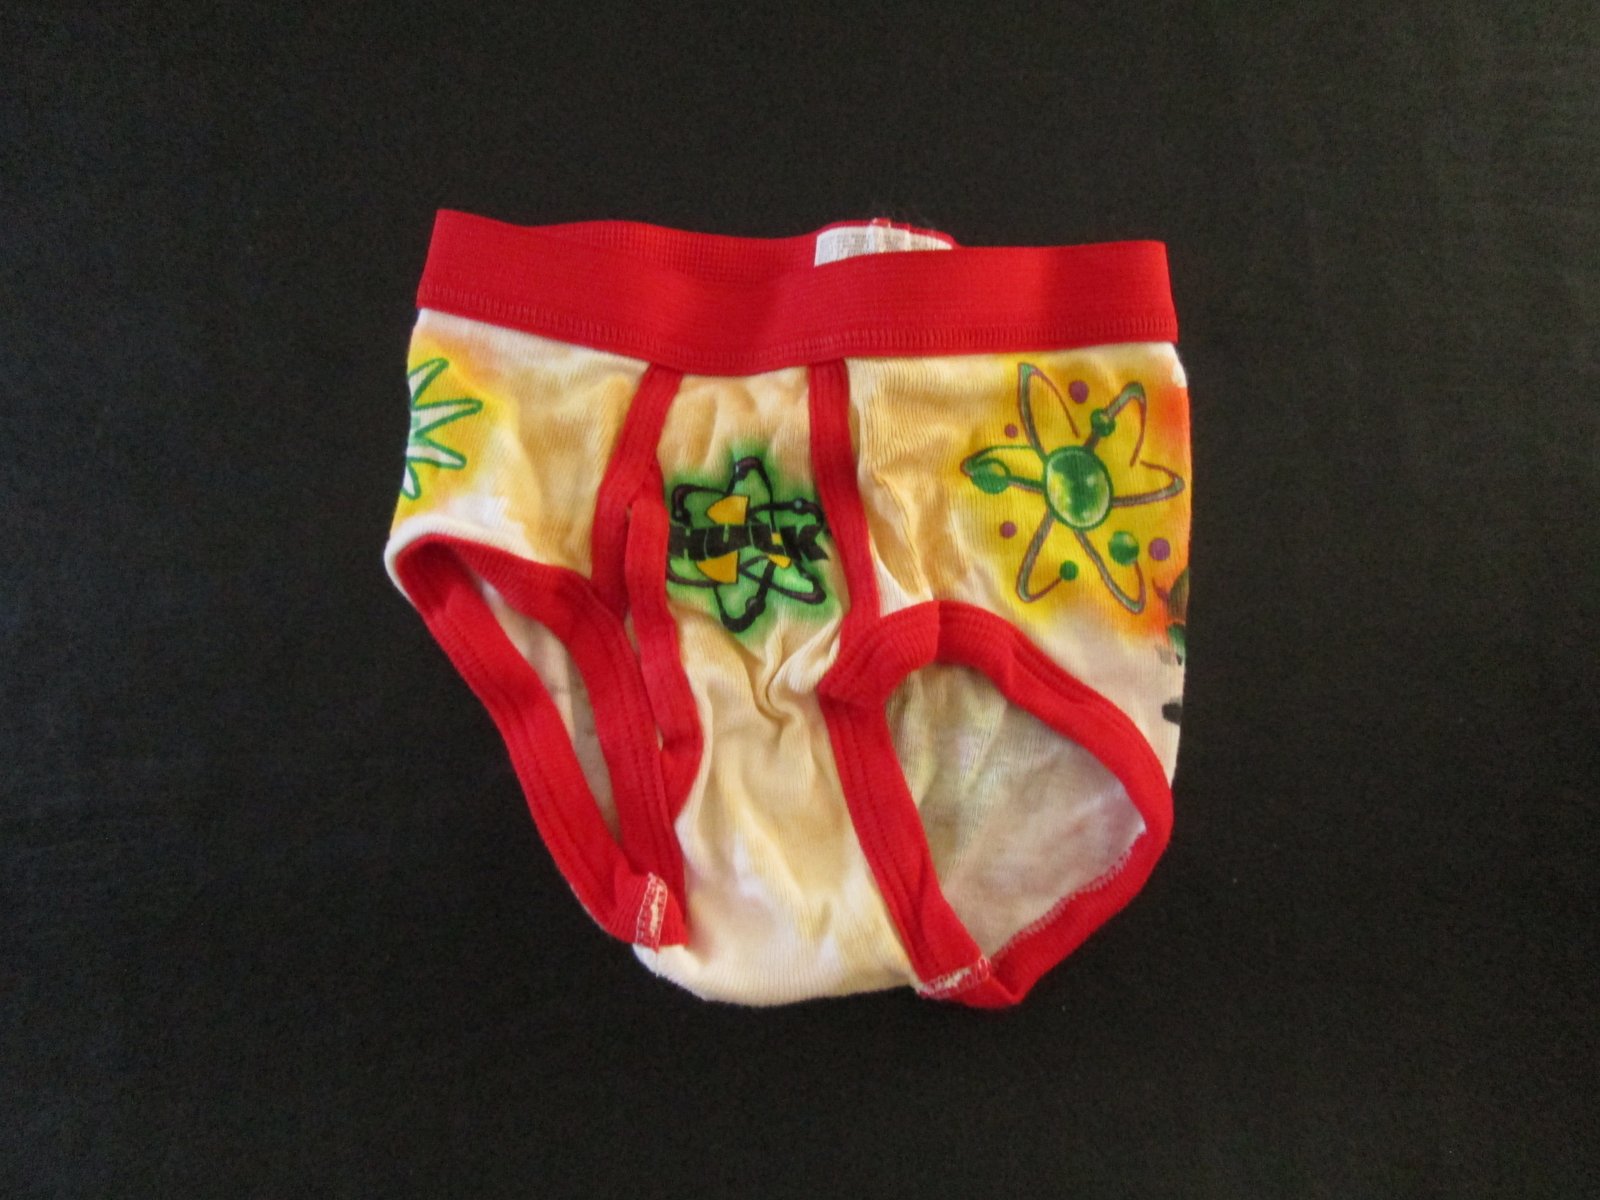 Boys dirty underwear (used and unwashed undies) / lkcqq9jj.jpg @